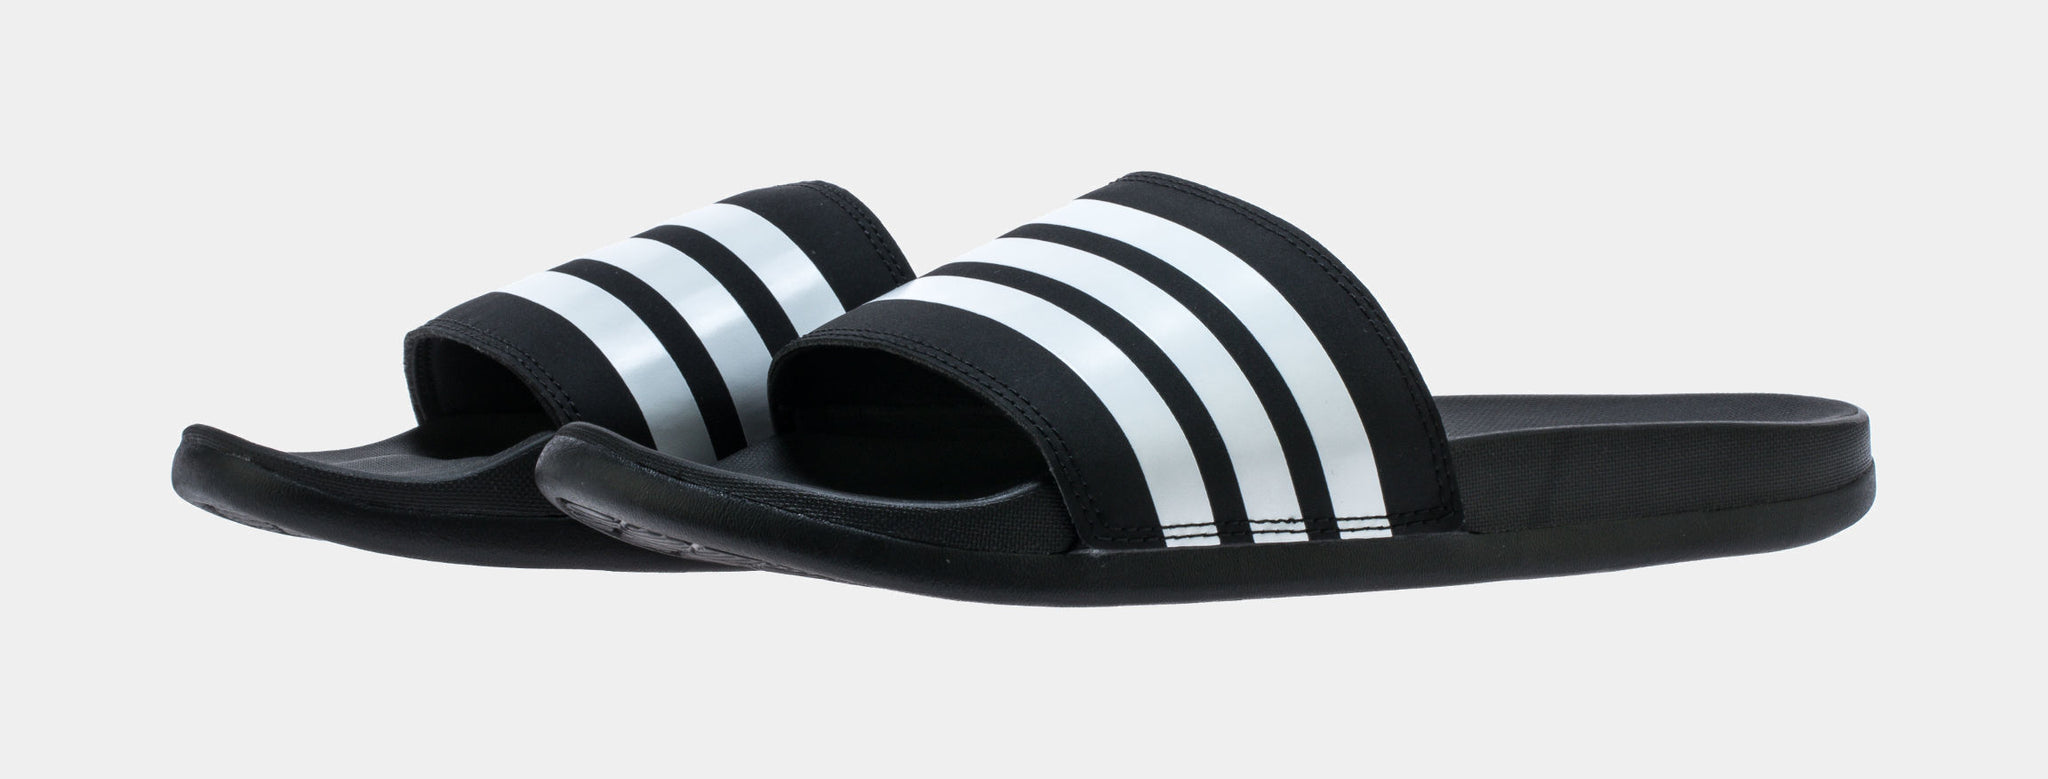 Mens Adidas Adilette Aqua F35539 White Black Sandals Slides Shoes | eBay